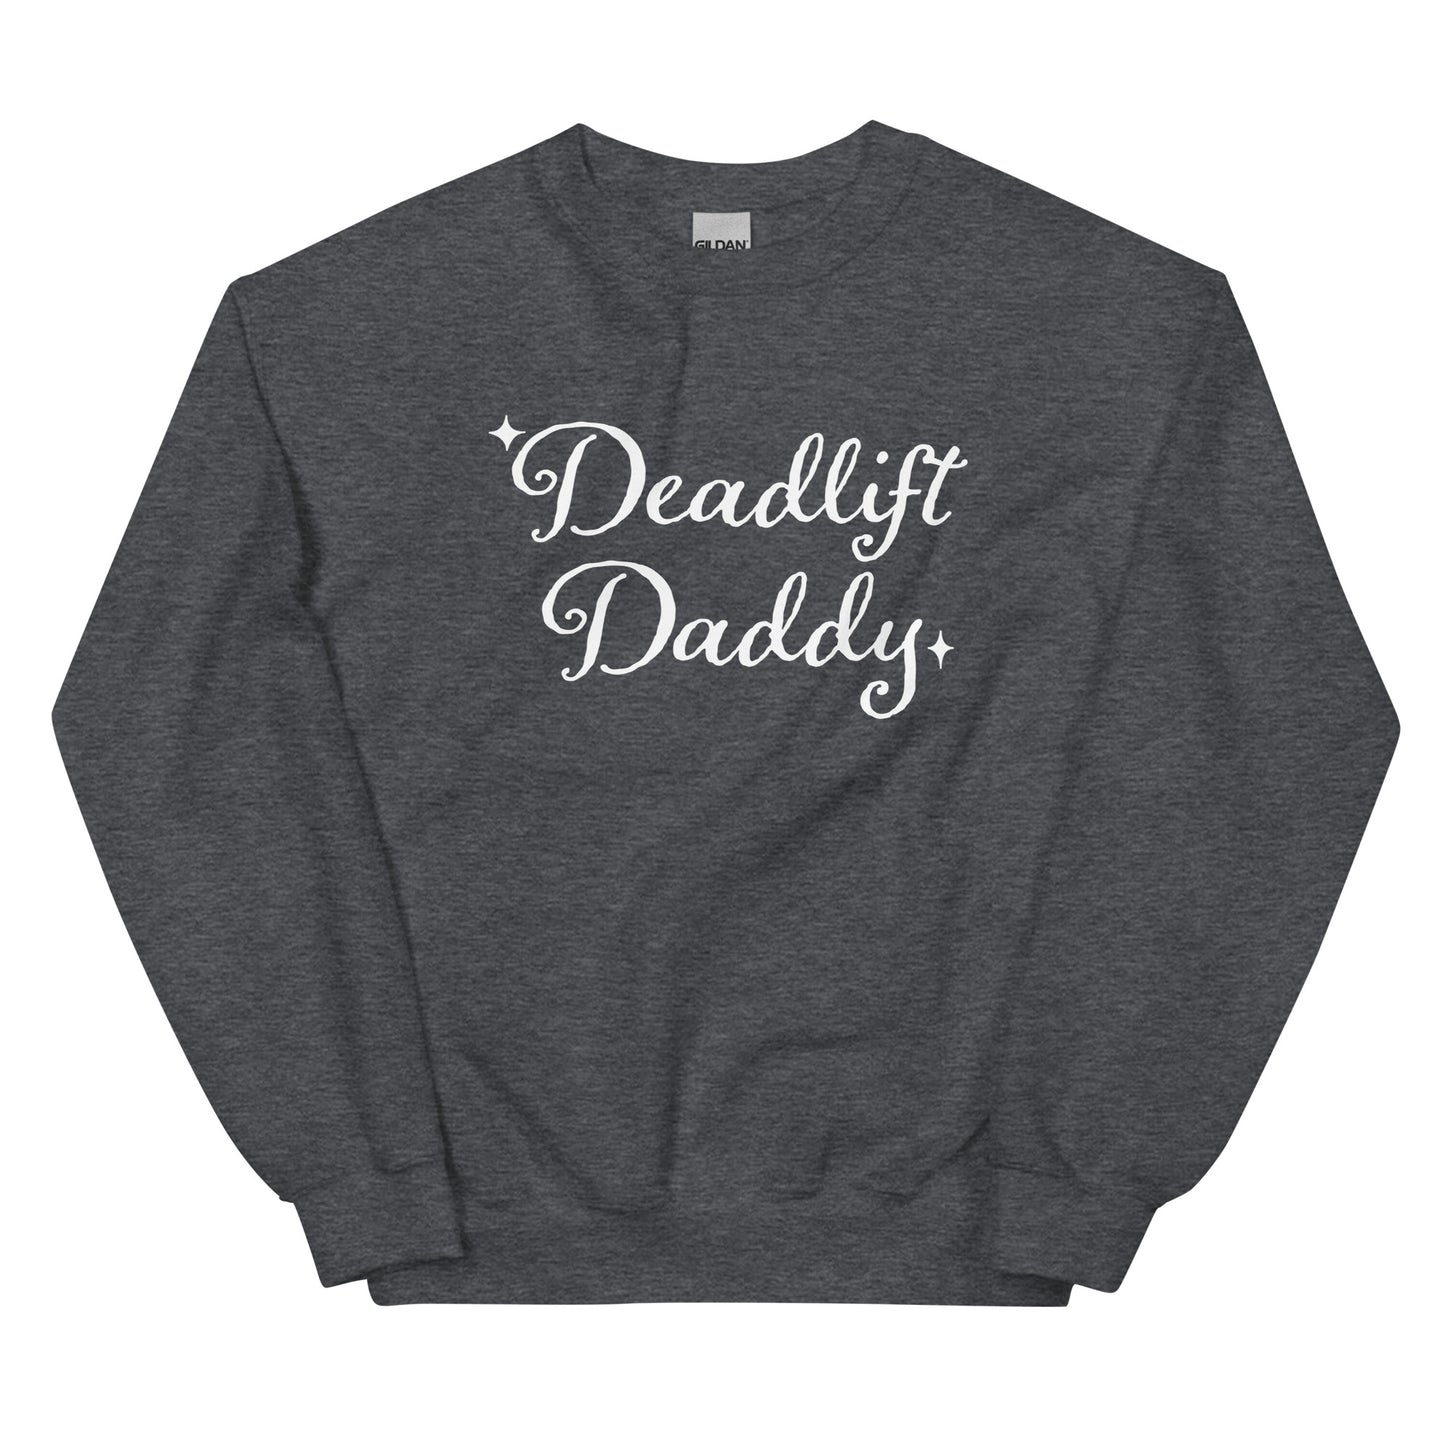 Deadlift Daddy Unisex Sweatshirt